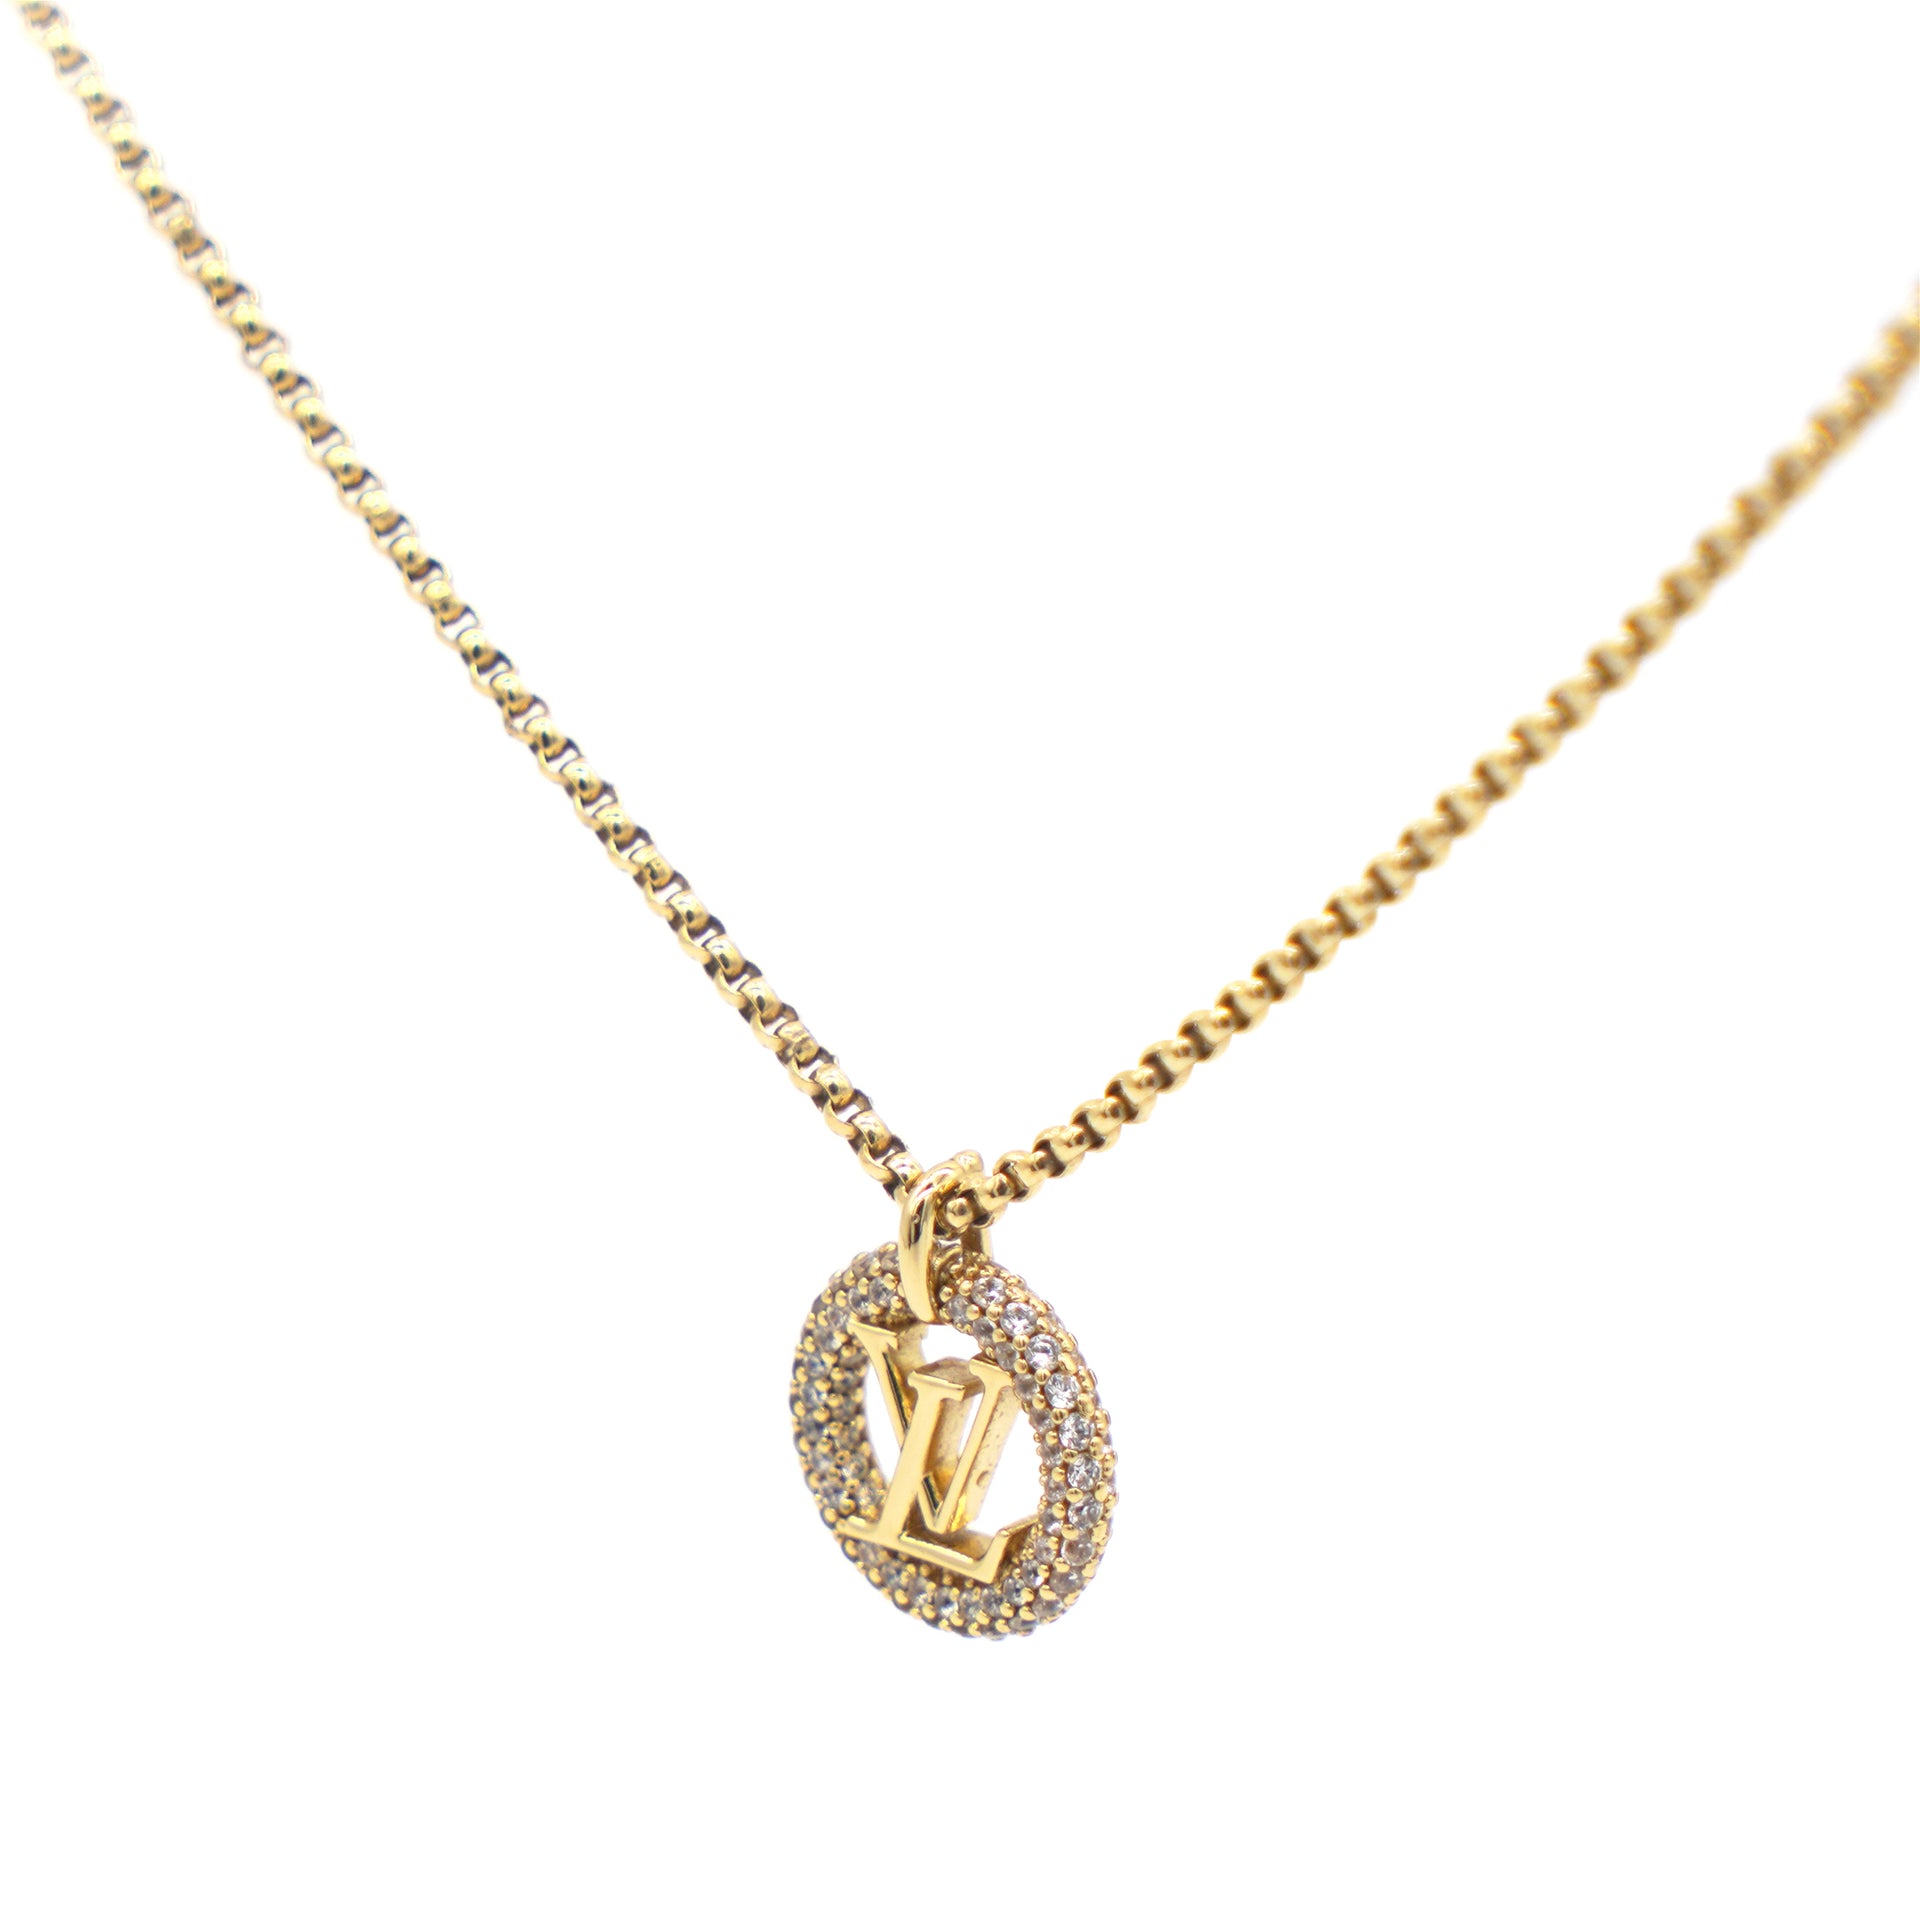 Louis Vuitton LV Louise by night M00759 necklace pendant gold